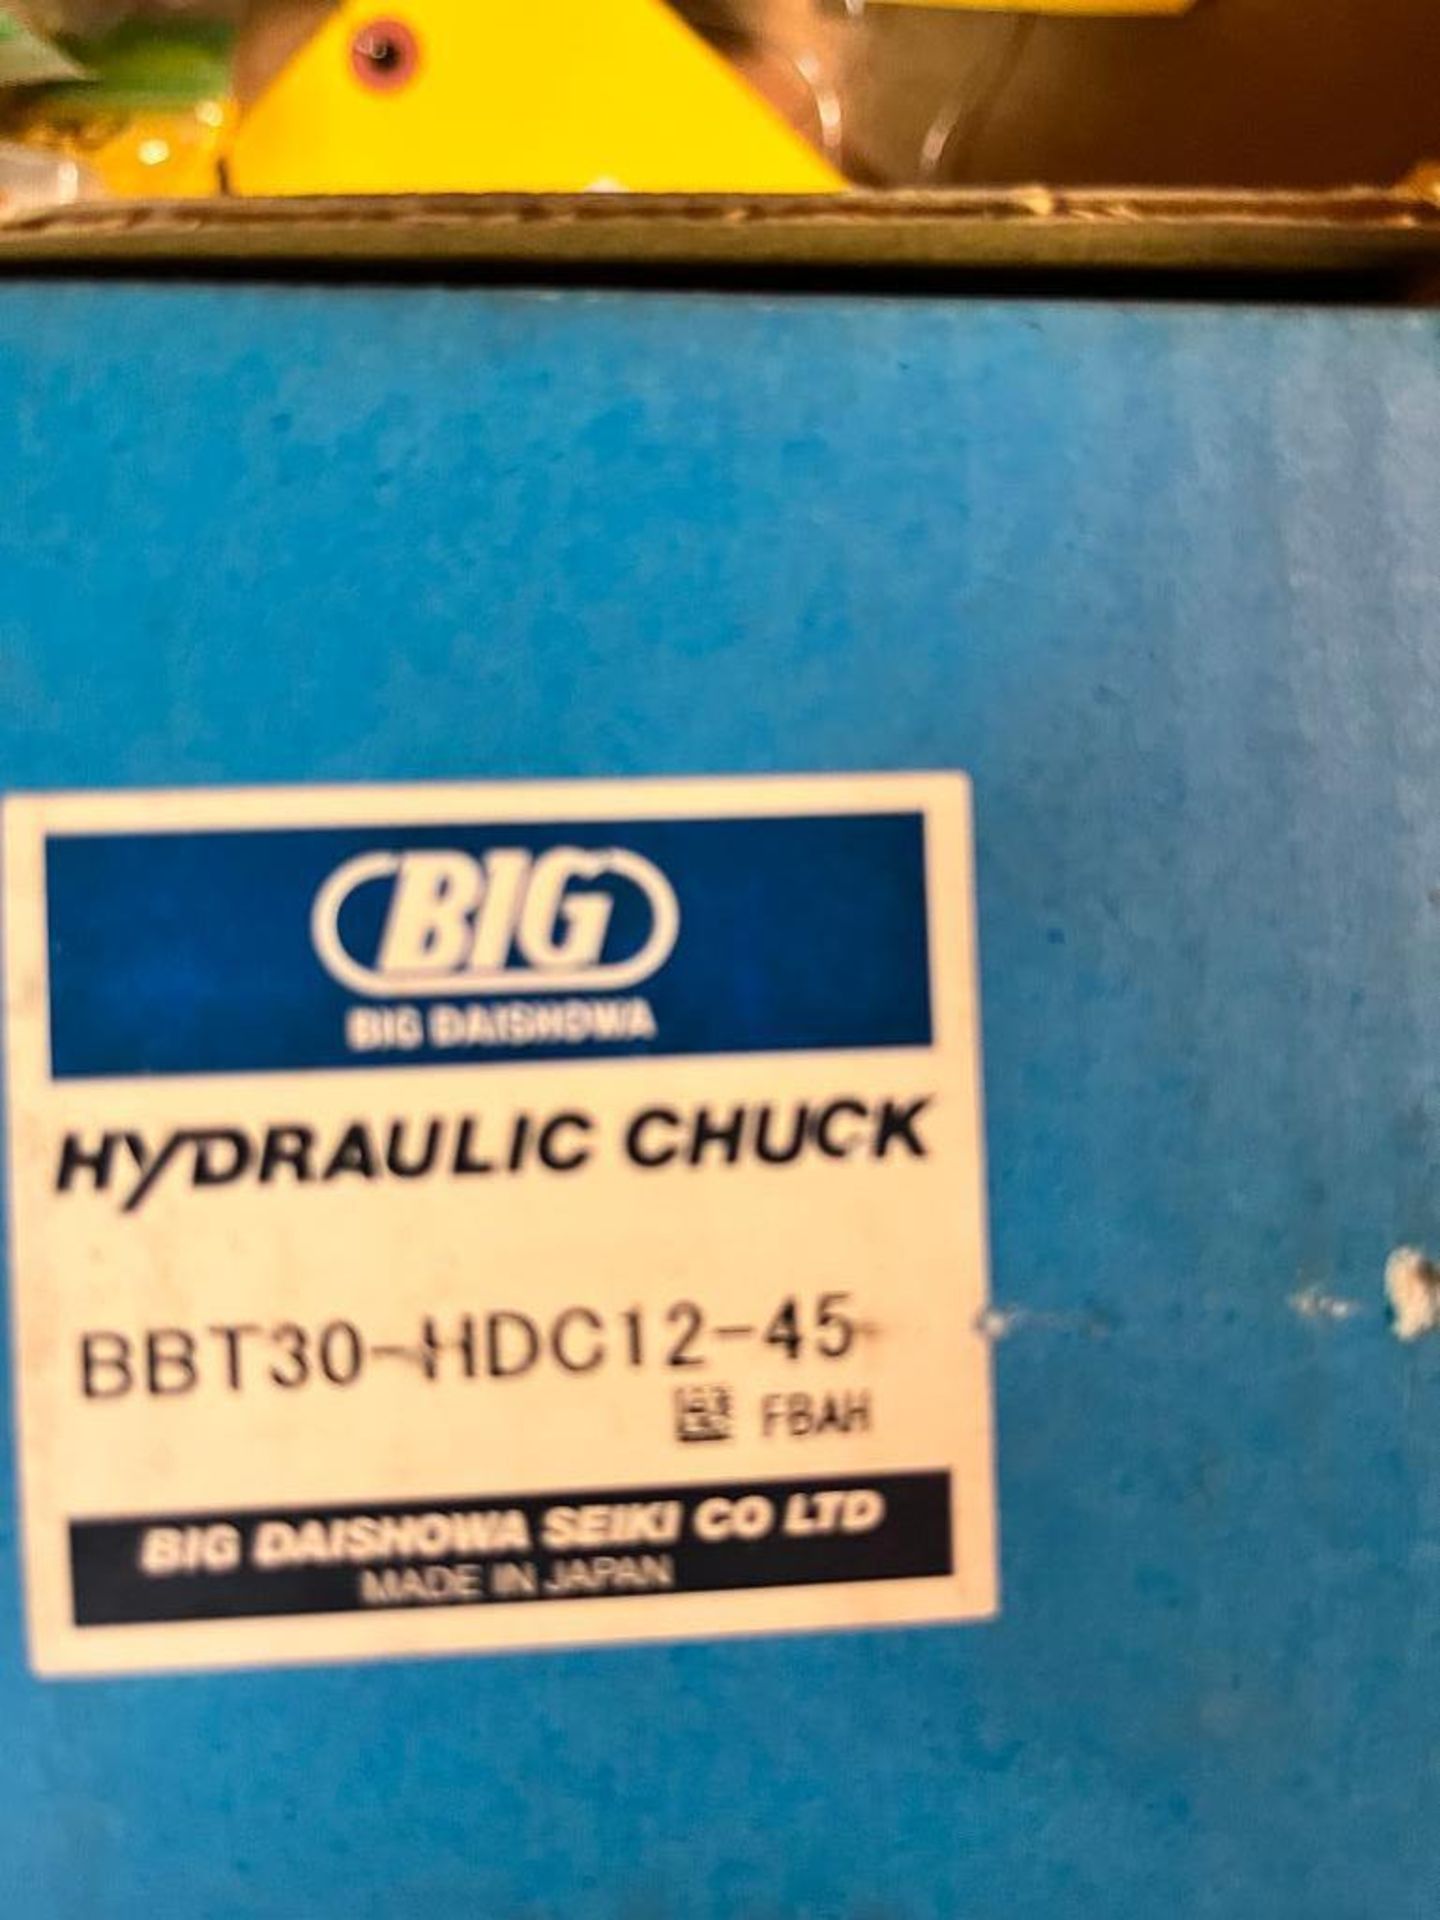 Big Daishowa Hydraulic Chuck, BBT30-HDC12-45 - Image 2 of 3